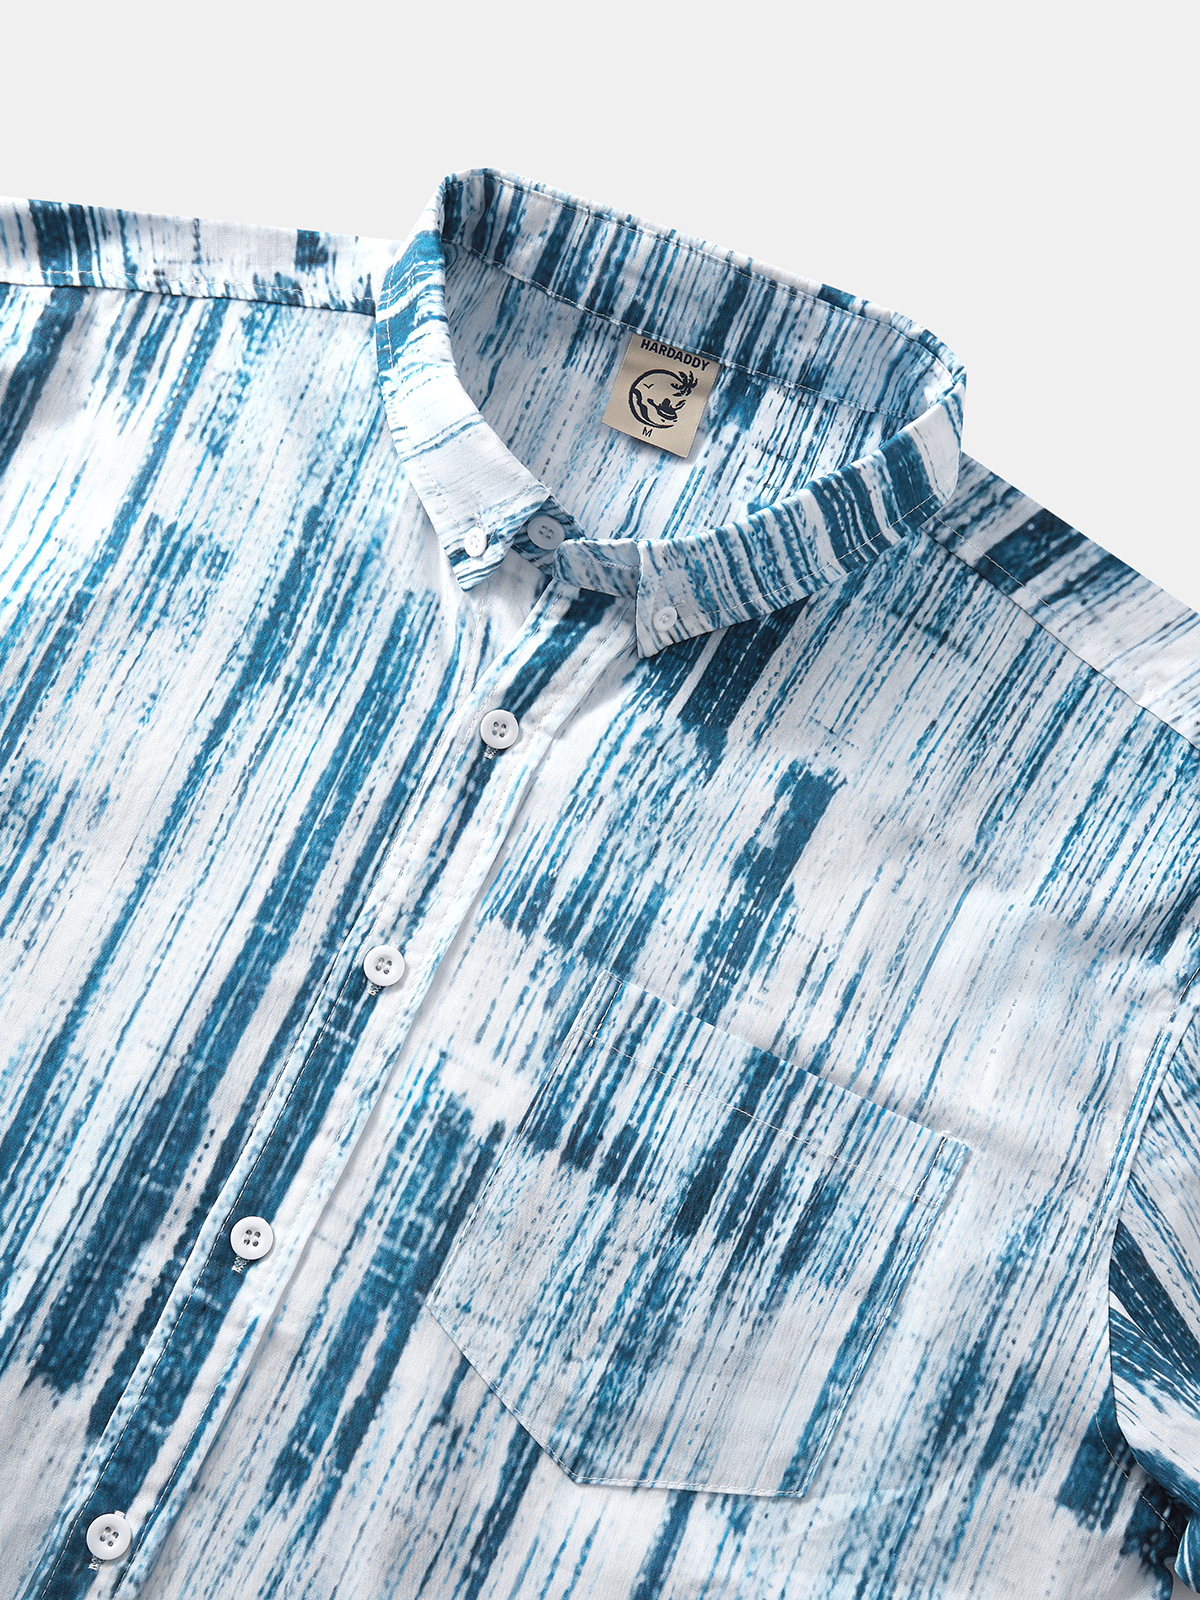 Hardaddy® Cotton Abstract Print Oxford Shirt